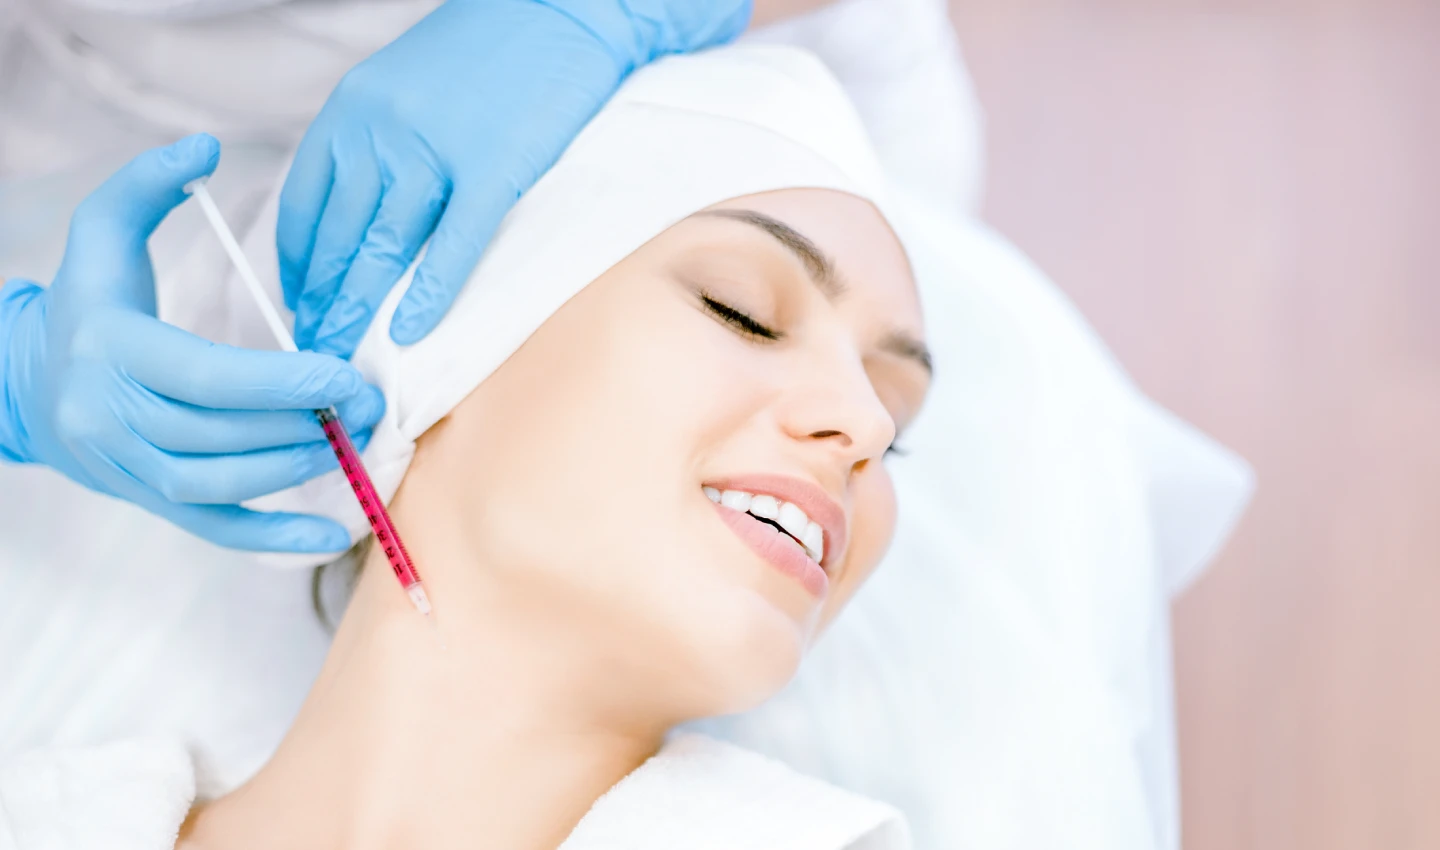 A woman receiving dermal filler treatment for postpartum facial rejuvenation, smiling happily during the procedure.